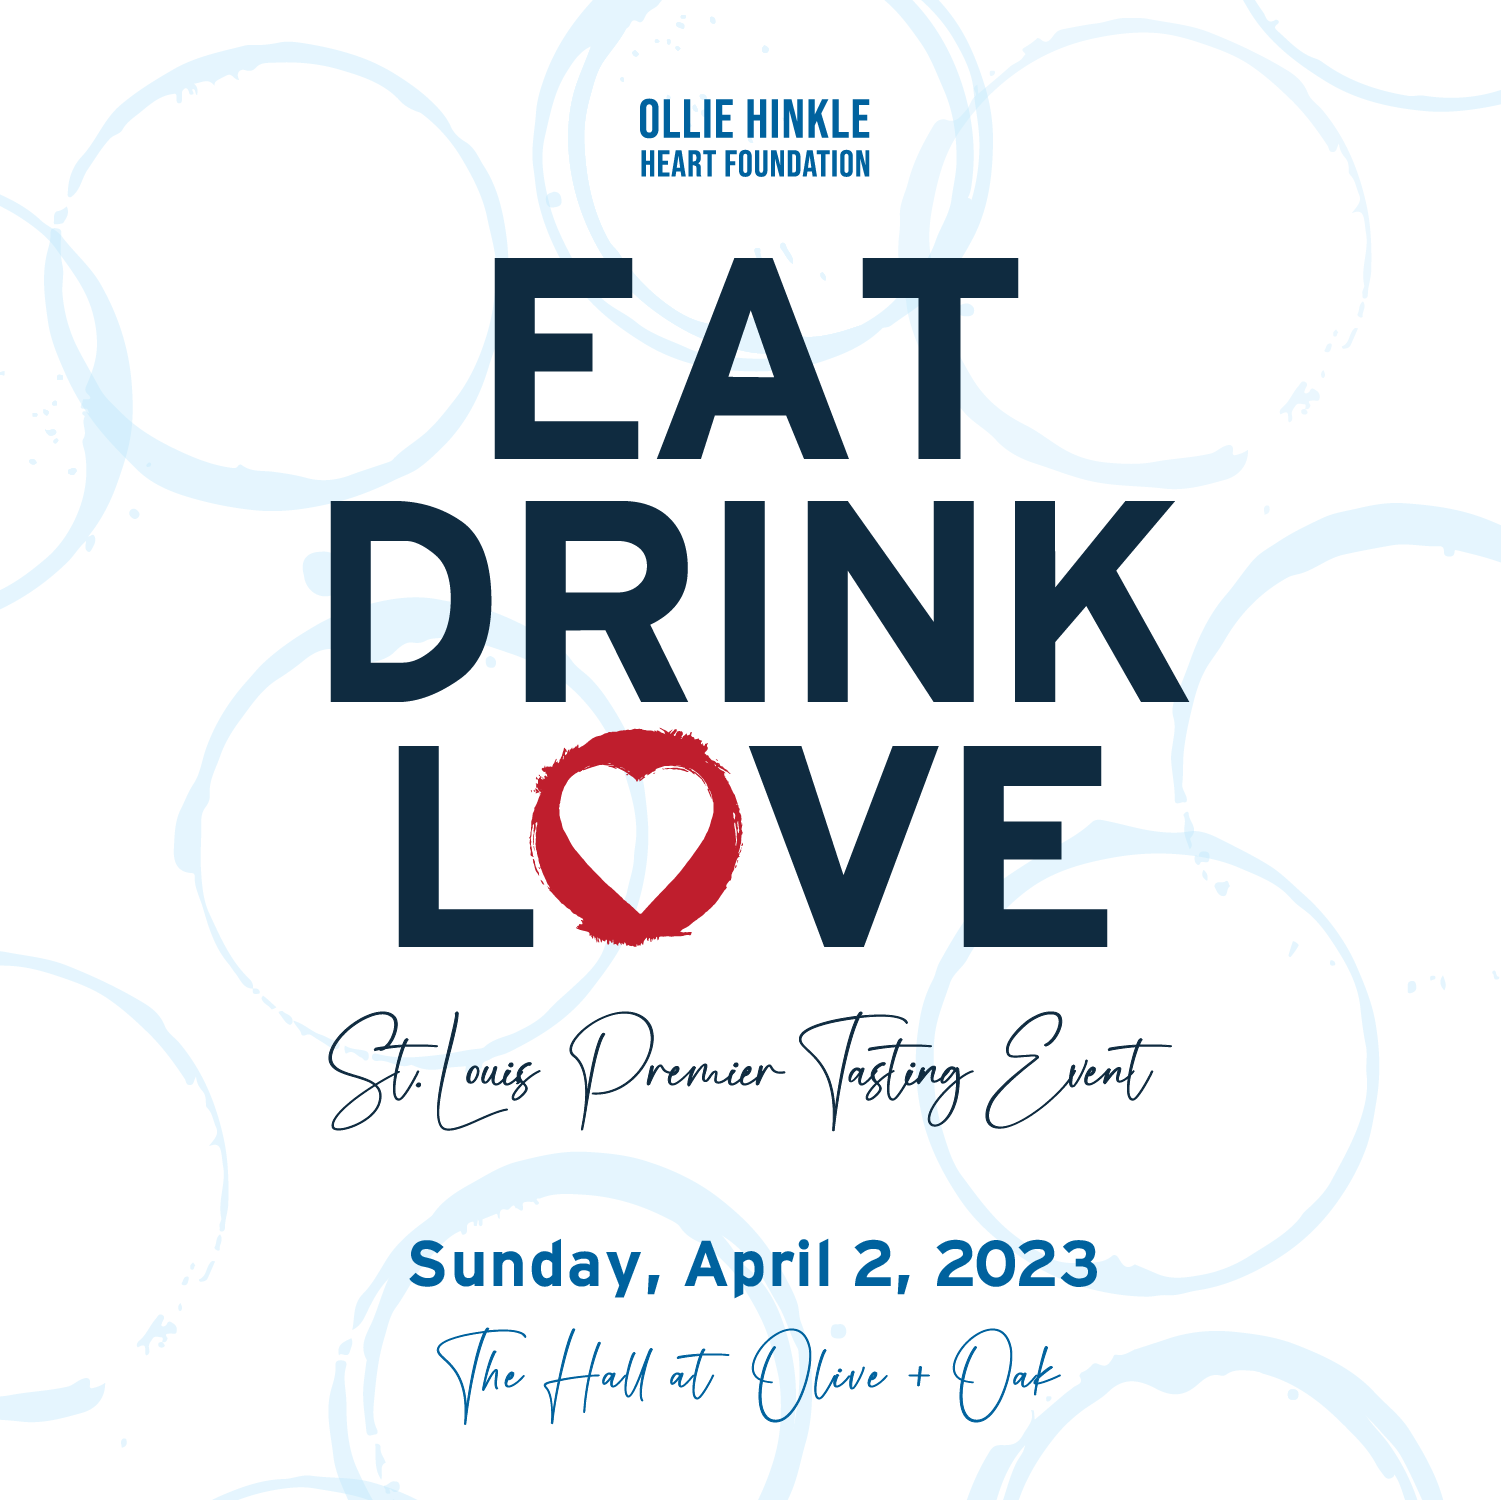 Eat Drink Love event April 2, 2023